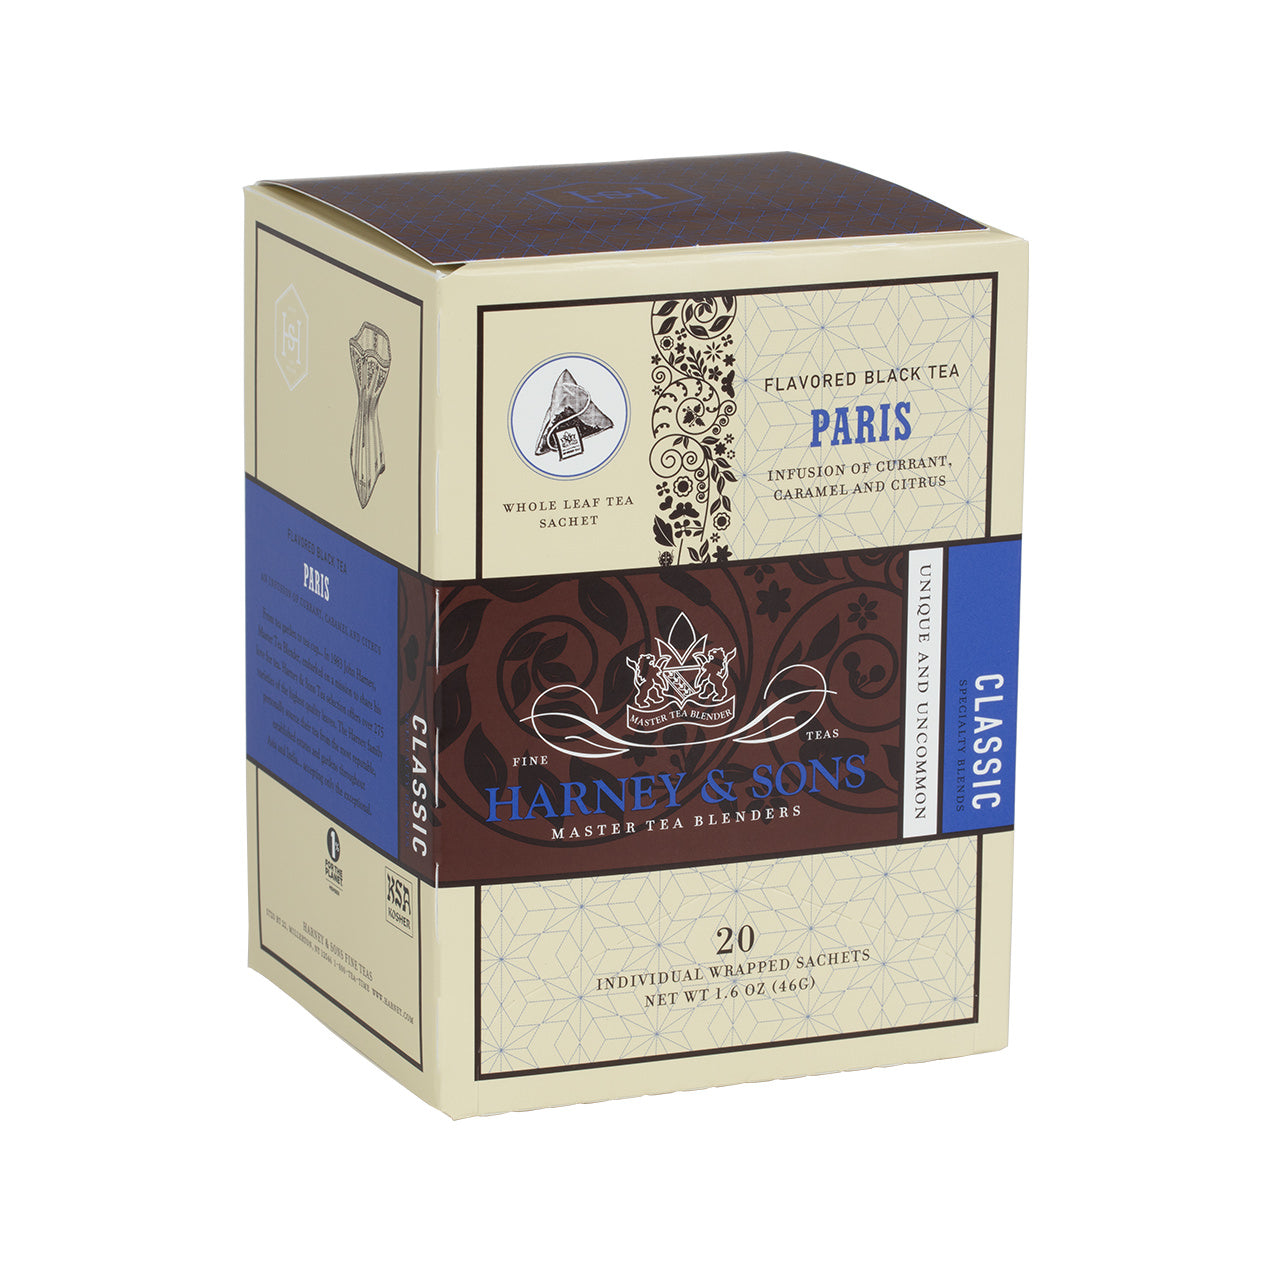 Paris Tea - Flavored Black Tea - Free Domestic Shipping - Harney